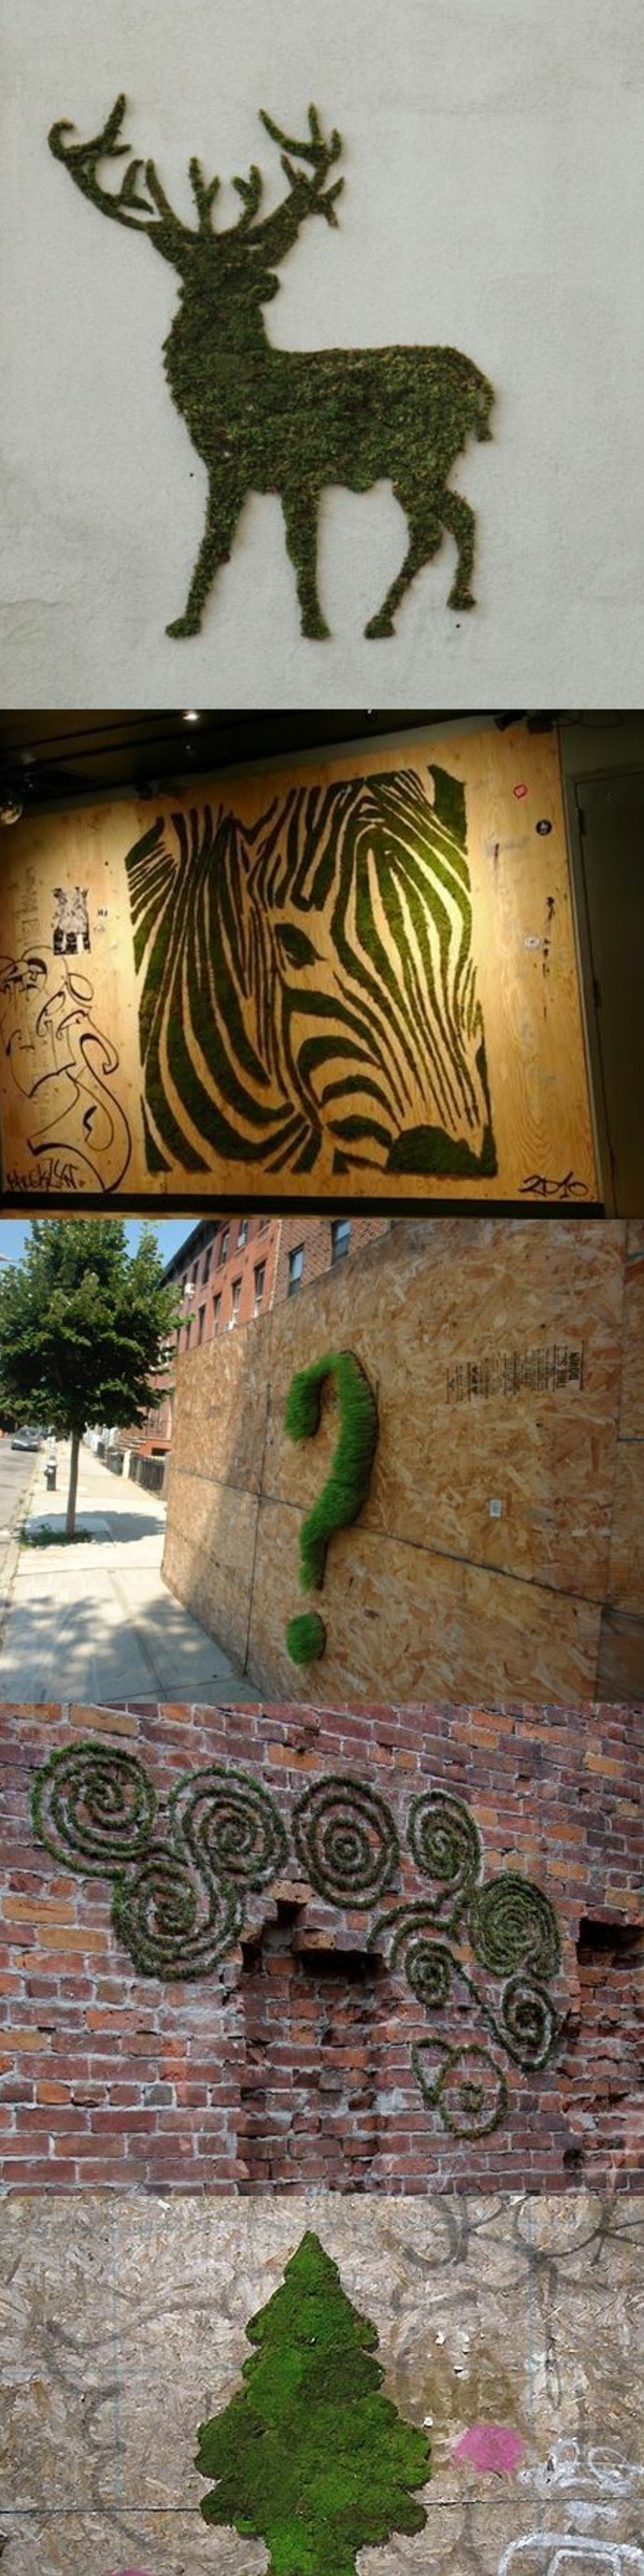 graffiti-original-et-ecolo-art-urbain-mousse-vegetale